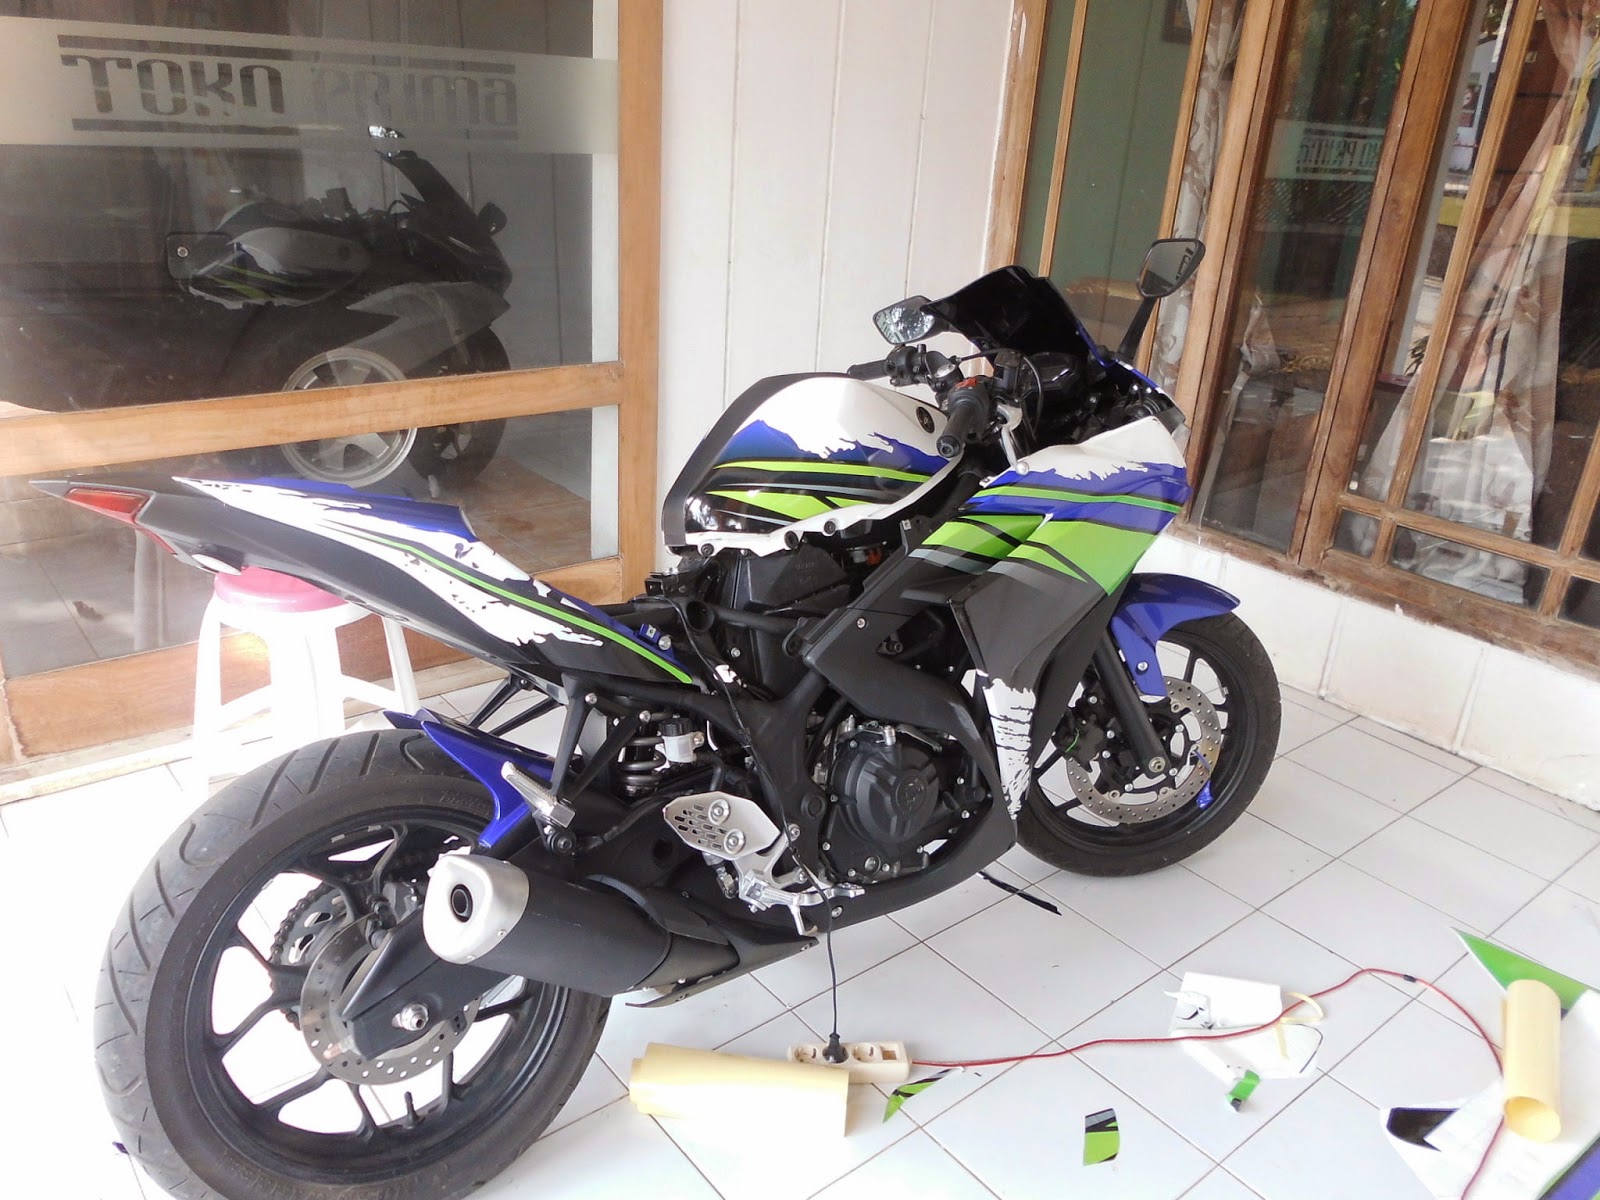 Modifikasi Custom Striping Motor Yamaha R25 Dengan Motif MotoGP By